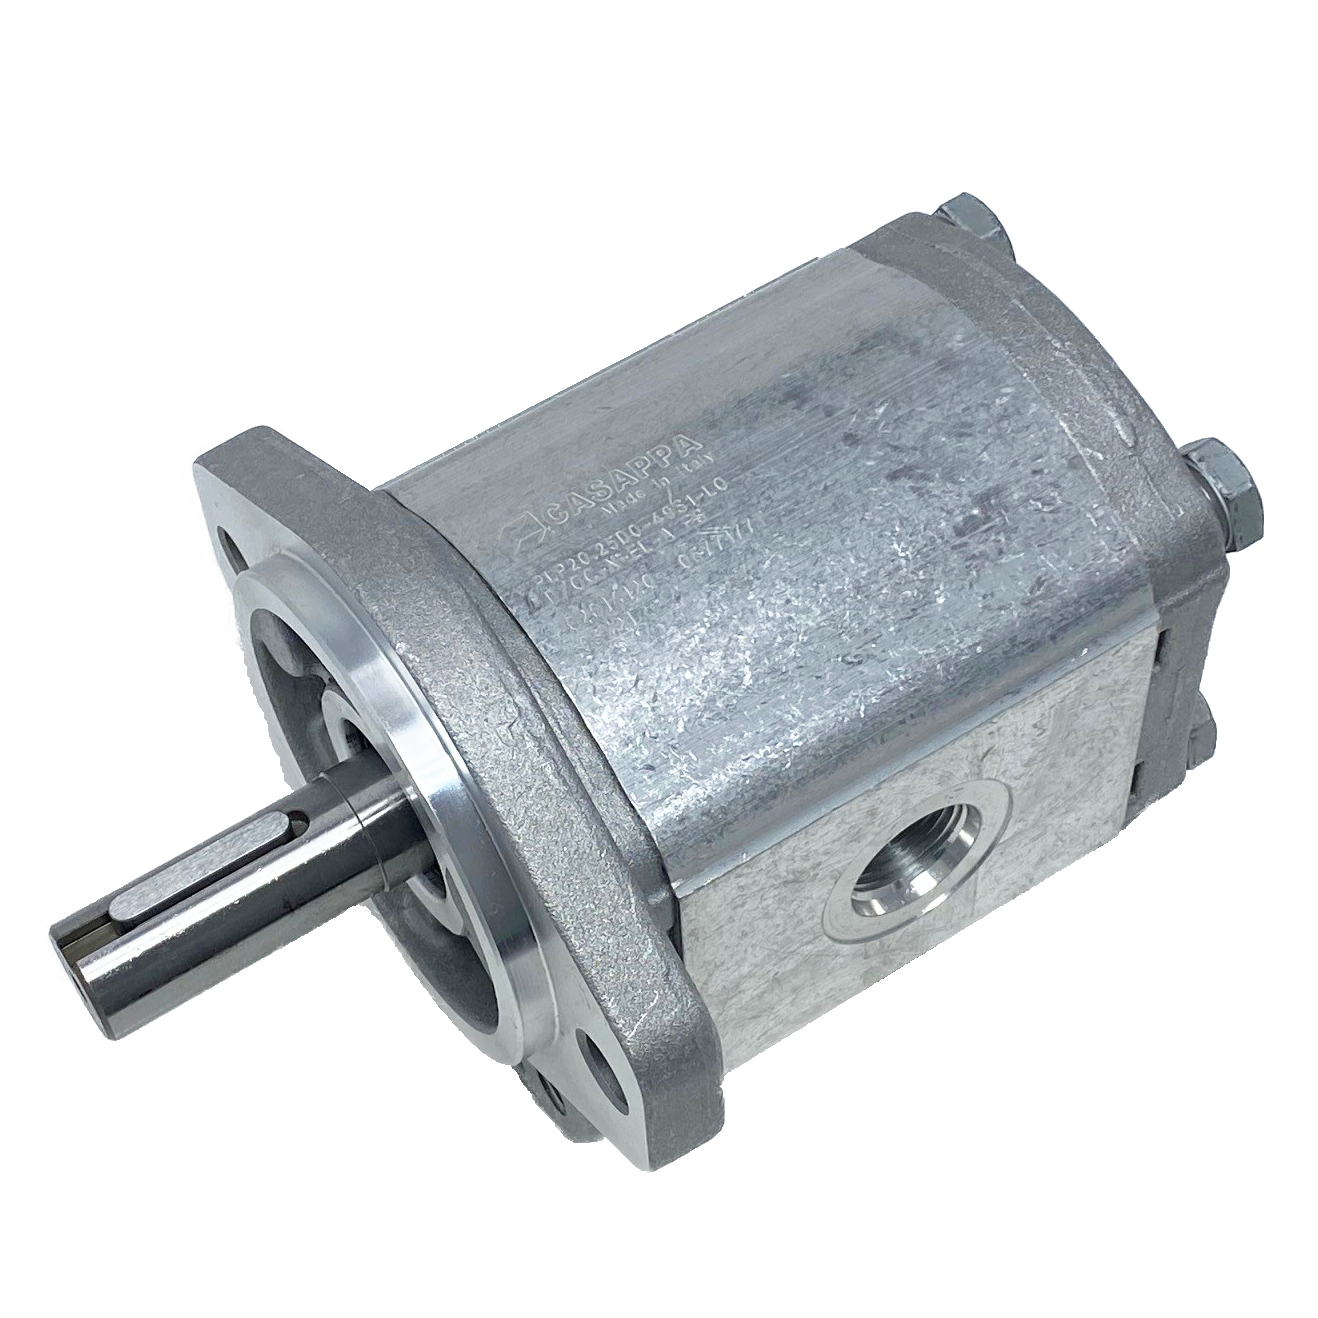 PHM20.27,8R0-49S9-LOC/OG-N-EL : Casappa Polaris Gear Motor, 28.21cc, 2900psi, 2500RPM, Reversible, External Drain, 3/4" Bore x 3/16" Key Shaft, SAE A 2-Bolt Flange, 0.625 (5/8") #10 SAE In, 1.25" #20 SAE Out, Cast Iron Body, Aluminum Flange